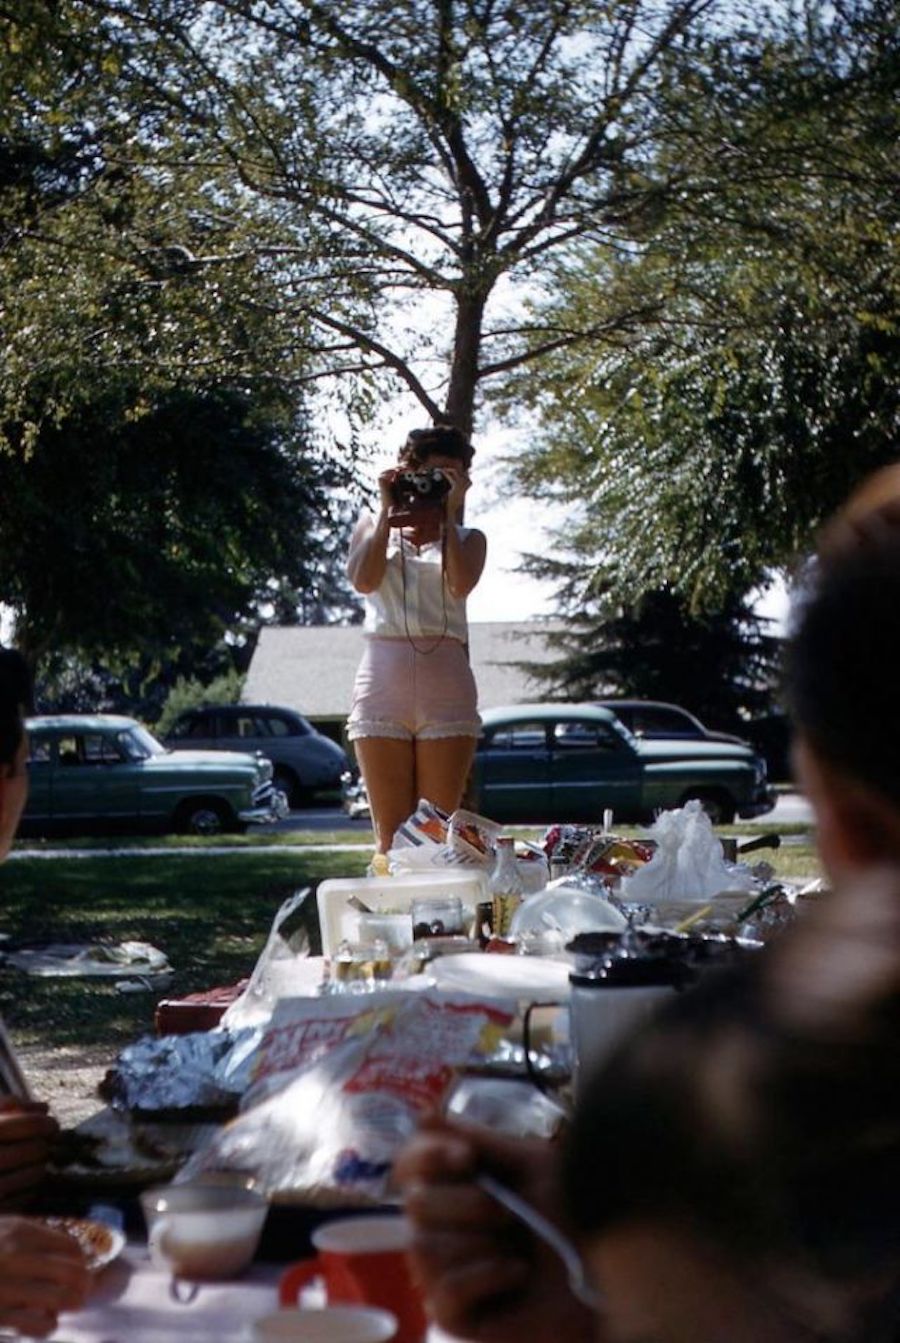 america picnics vintage photos kodachrome 1950s 1960s